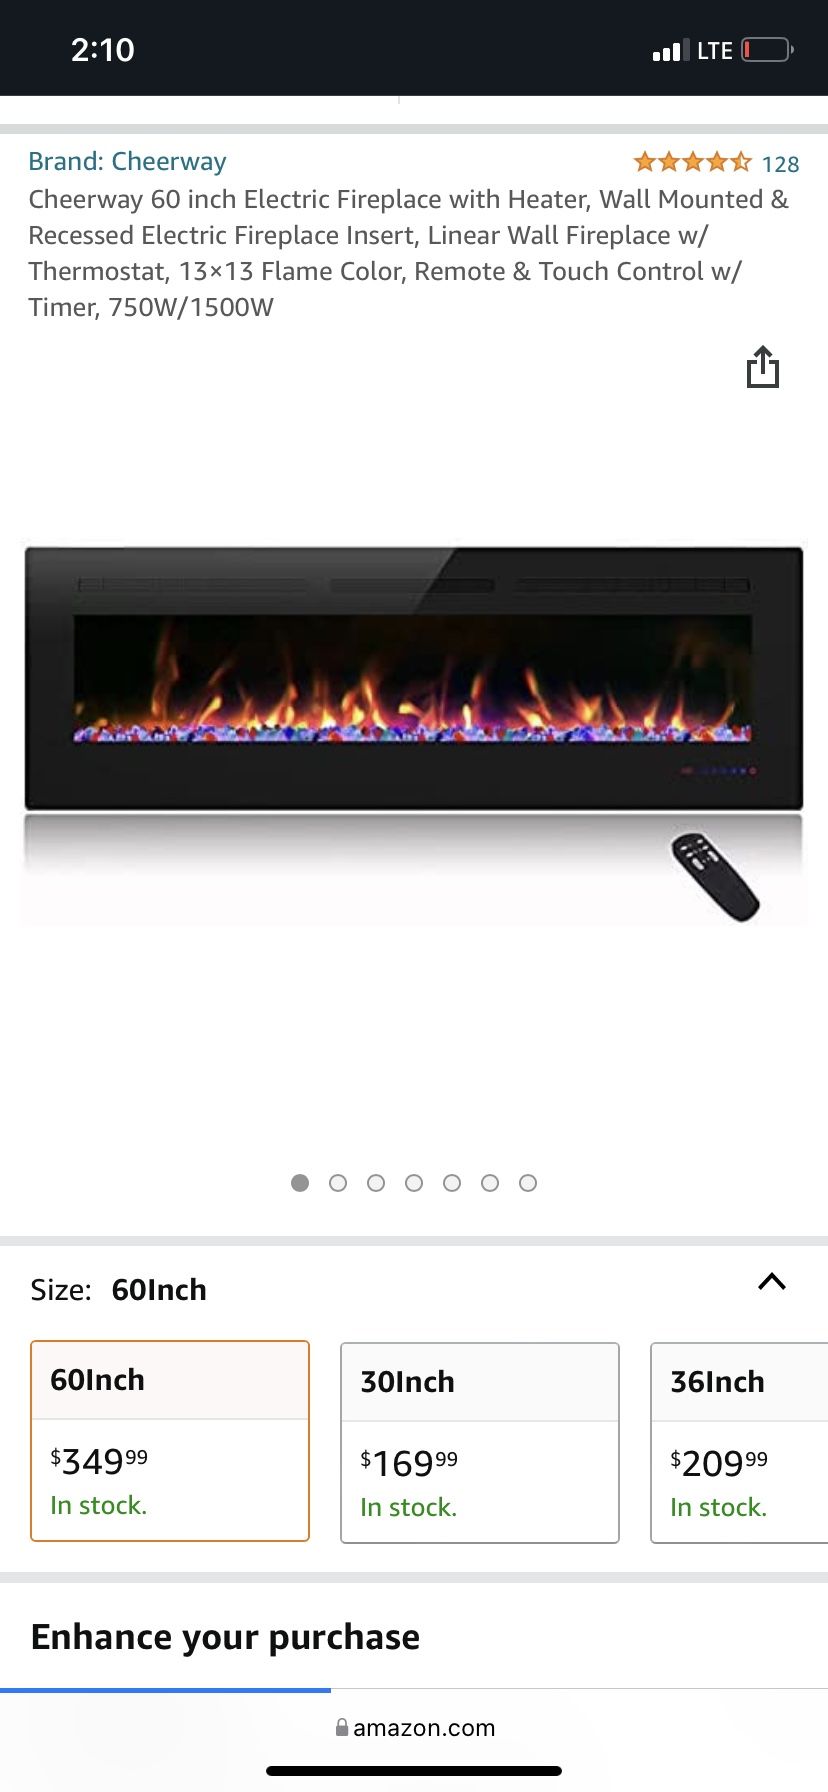 New 60 Inch Fireplace Very Nice!! $200